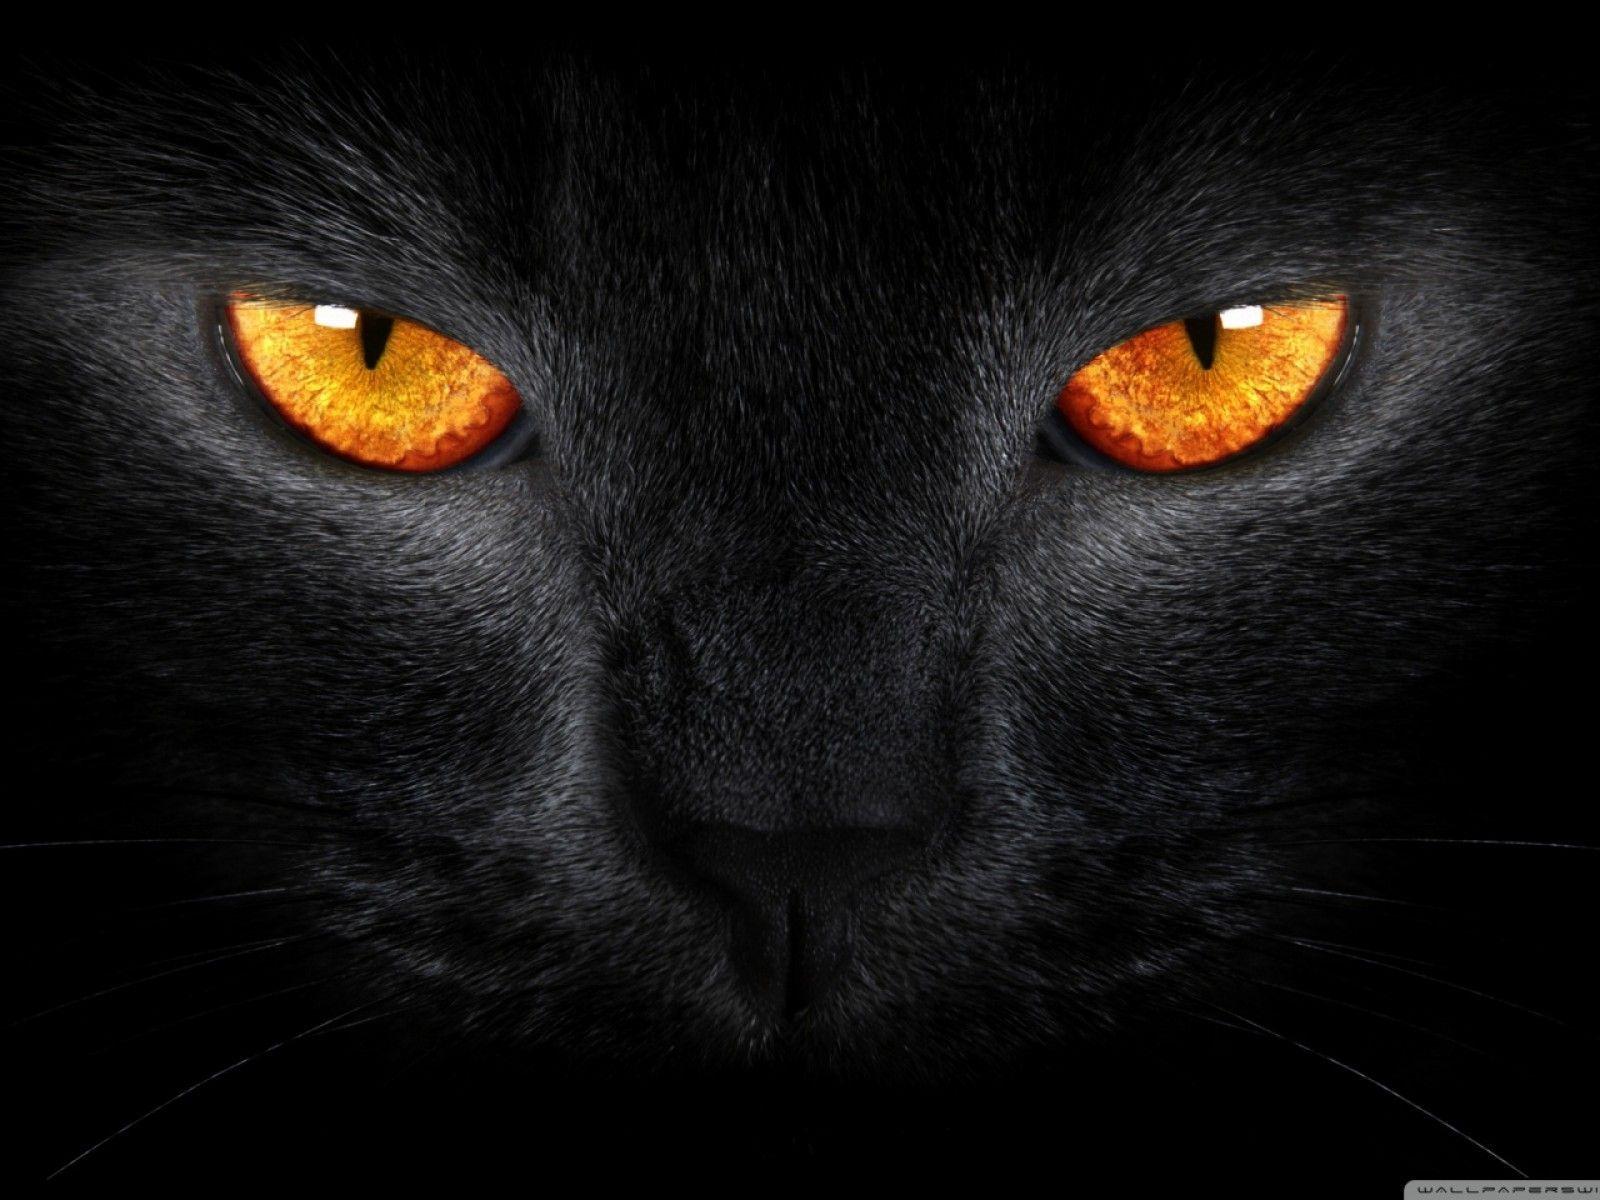 orange black animal. Black Cat with Orange Eyes. Cats. Cats